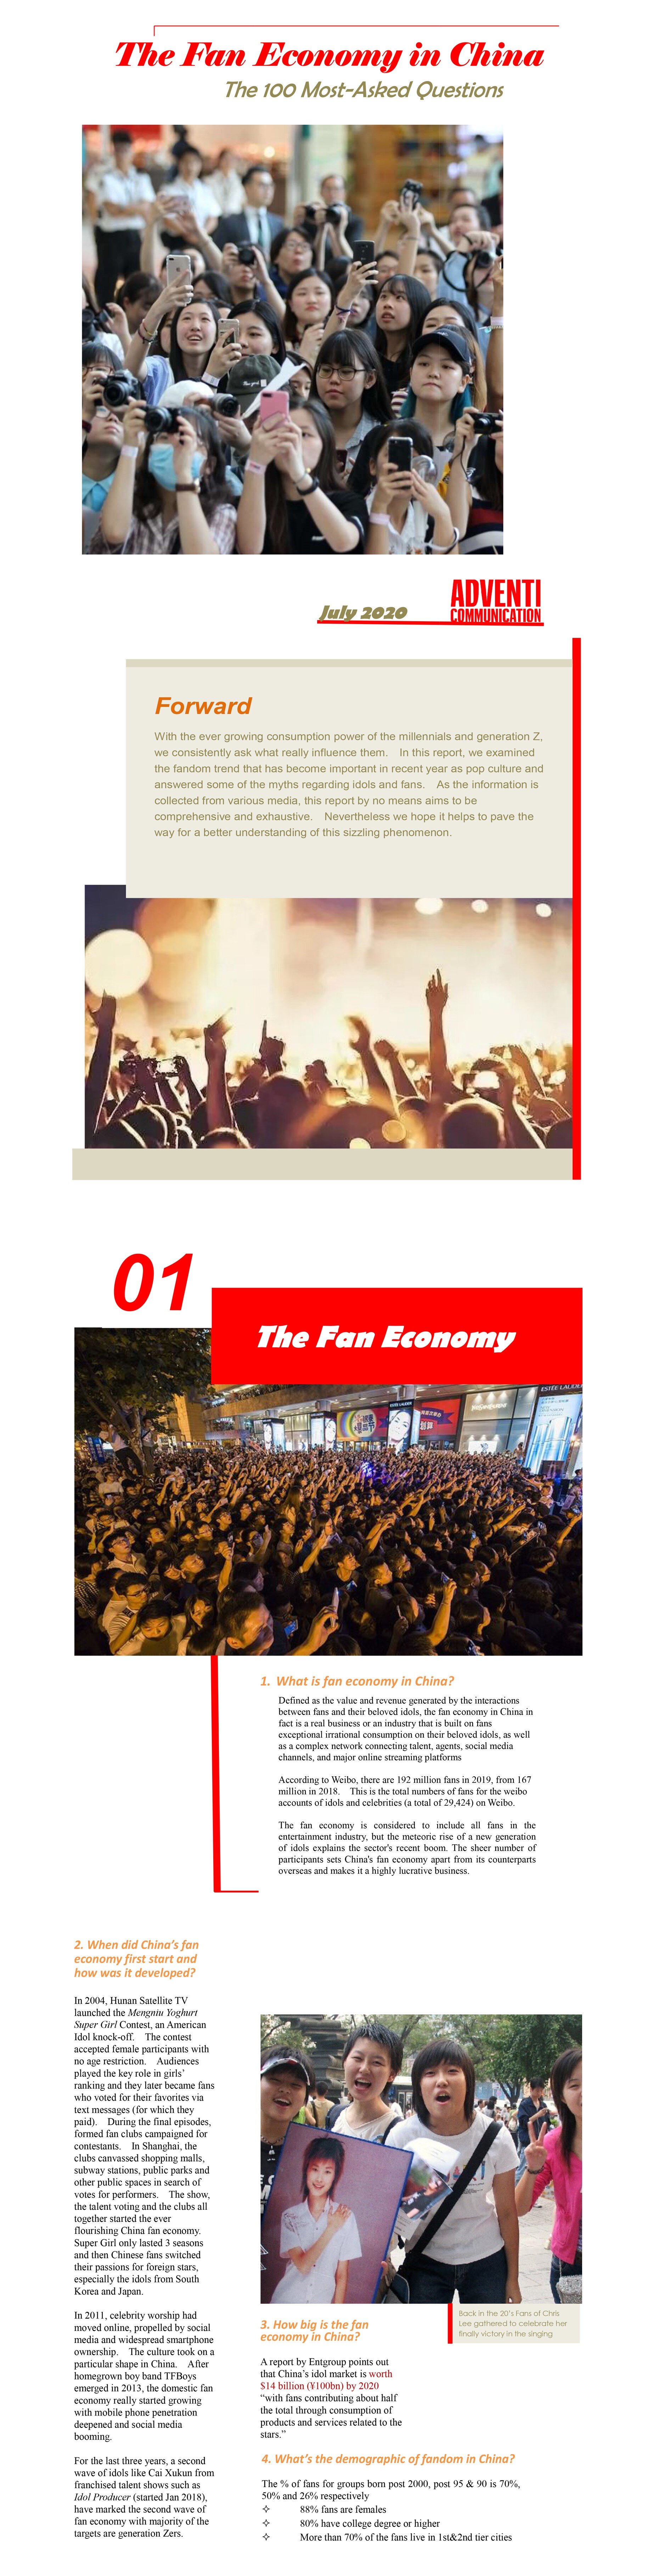 China-Fan-Economy-1.jpg